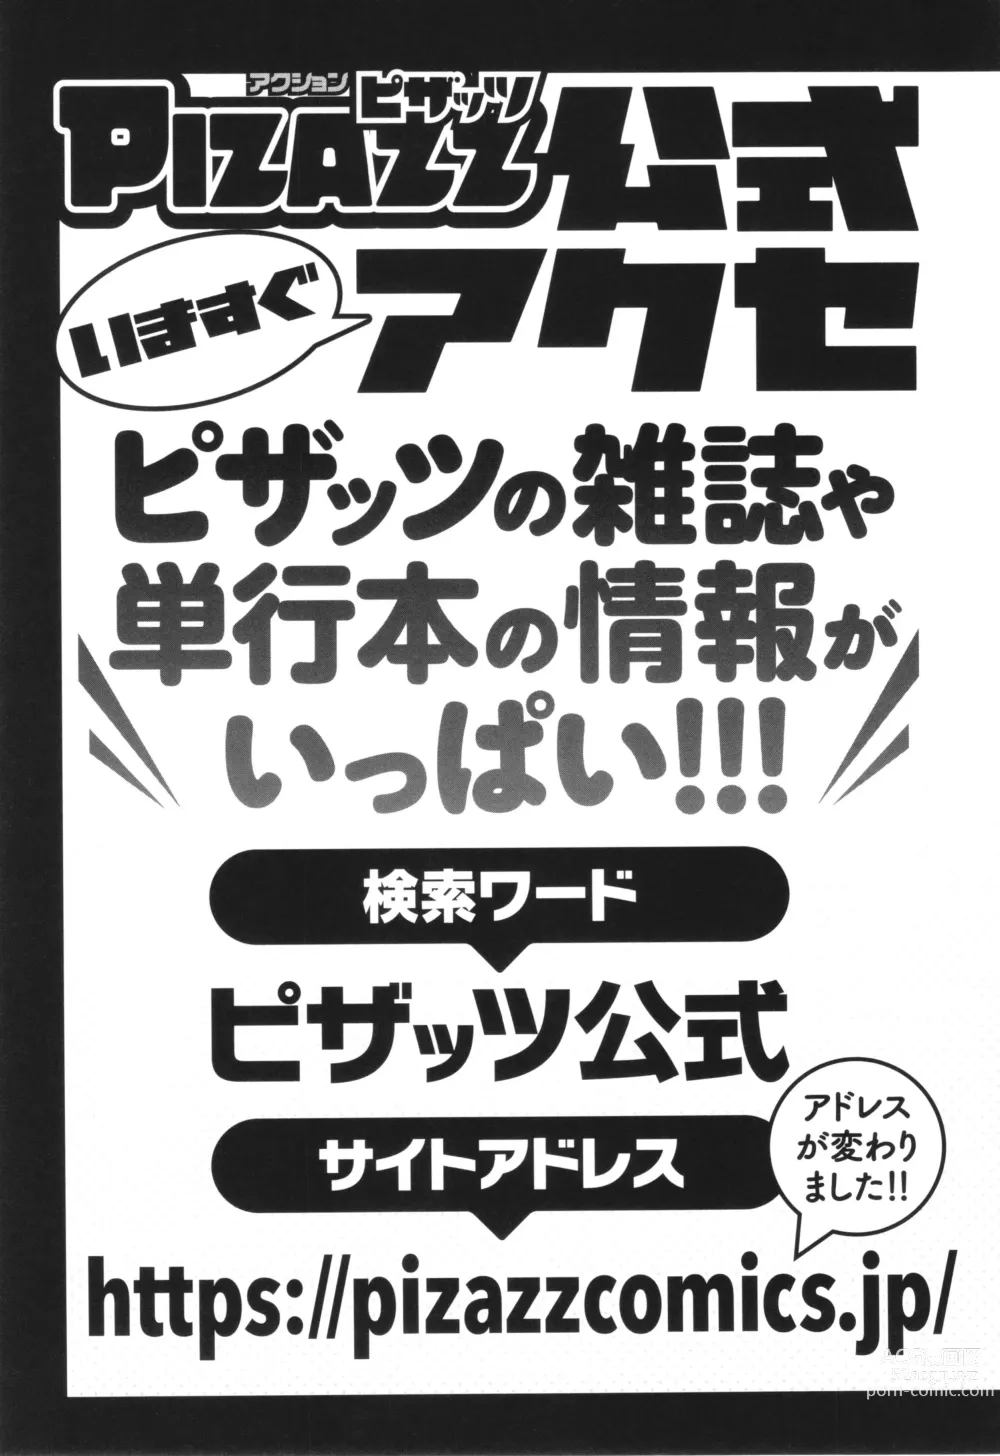 Page 197 of manga Compla Yuruyuru Chimari-san  - Chimaris compliance awareness is very lax.